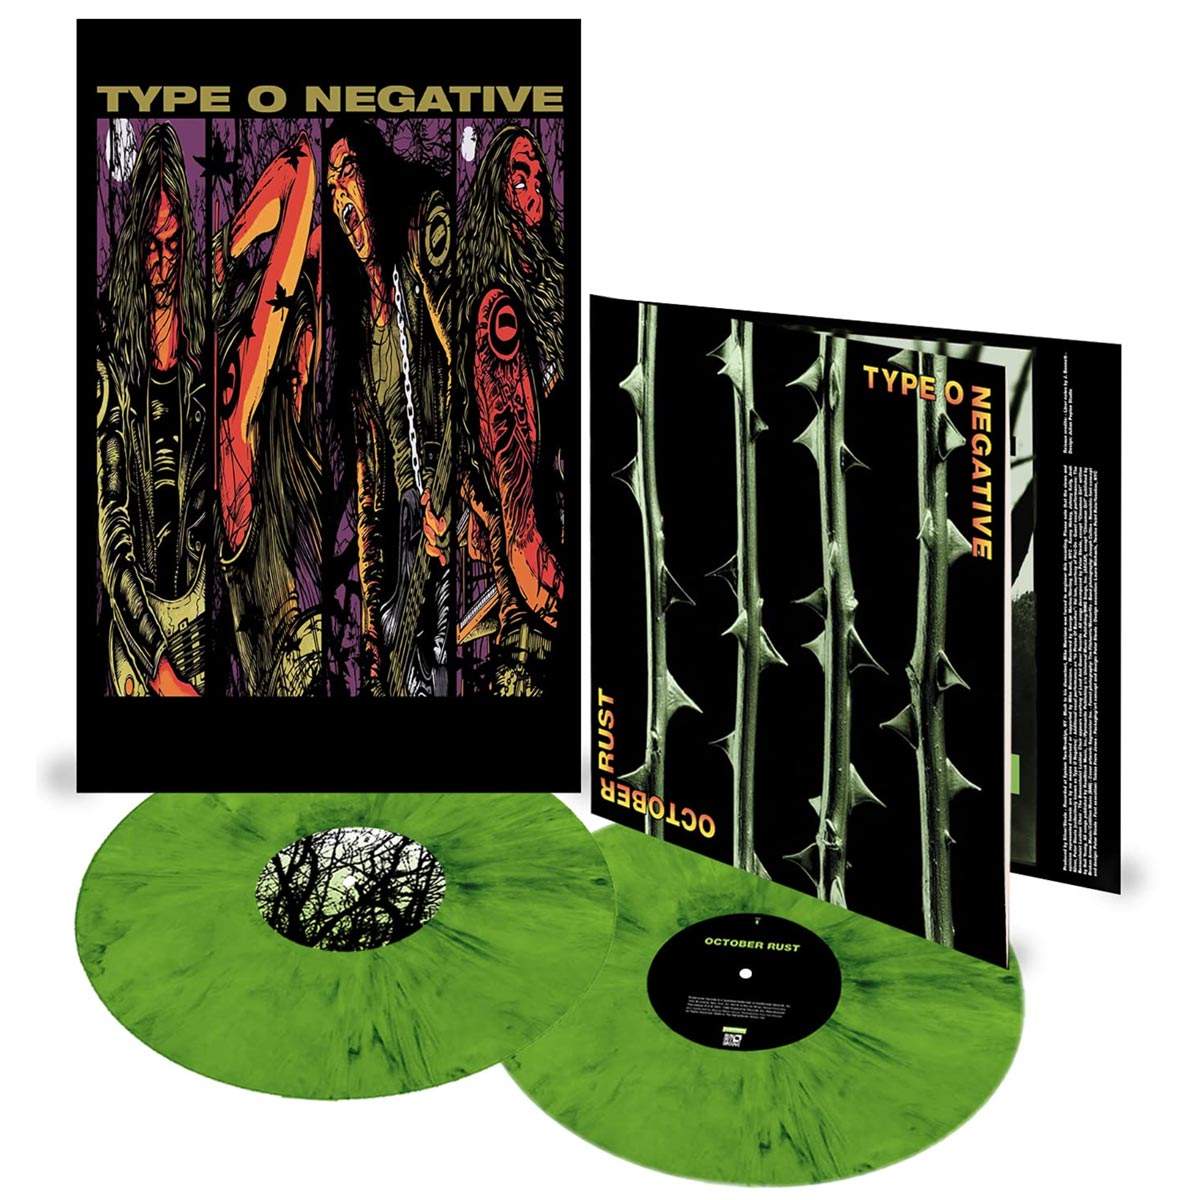 Type O Negative - October rust (Green/Ltd 25th Anniversary) - 2 x LP